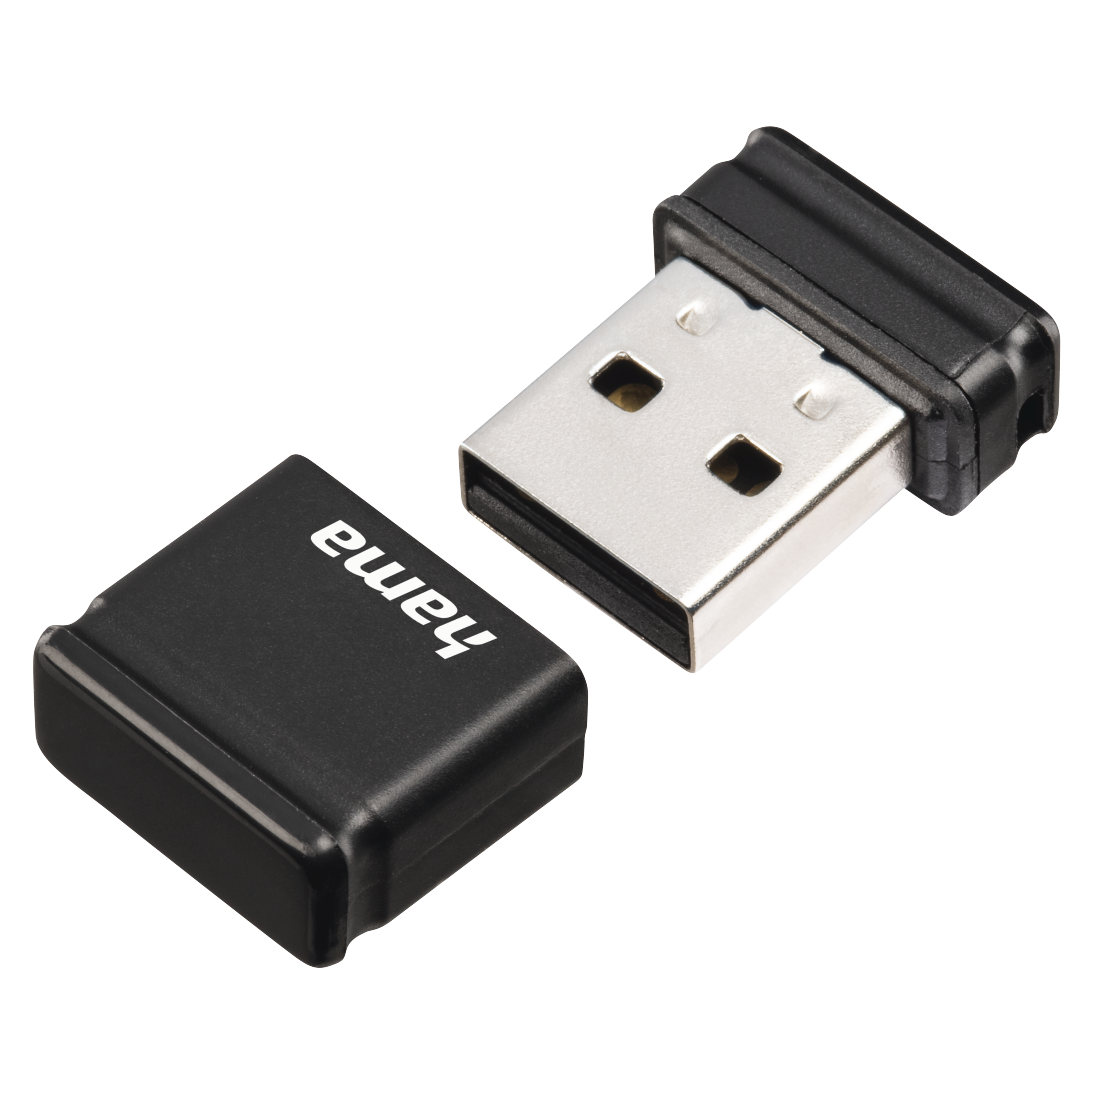 00094169 Hama "Smartly" USB Flash Drive, USB 2.0, 16 GB, 10 MB/s, black